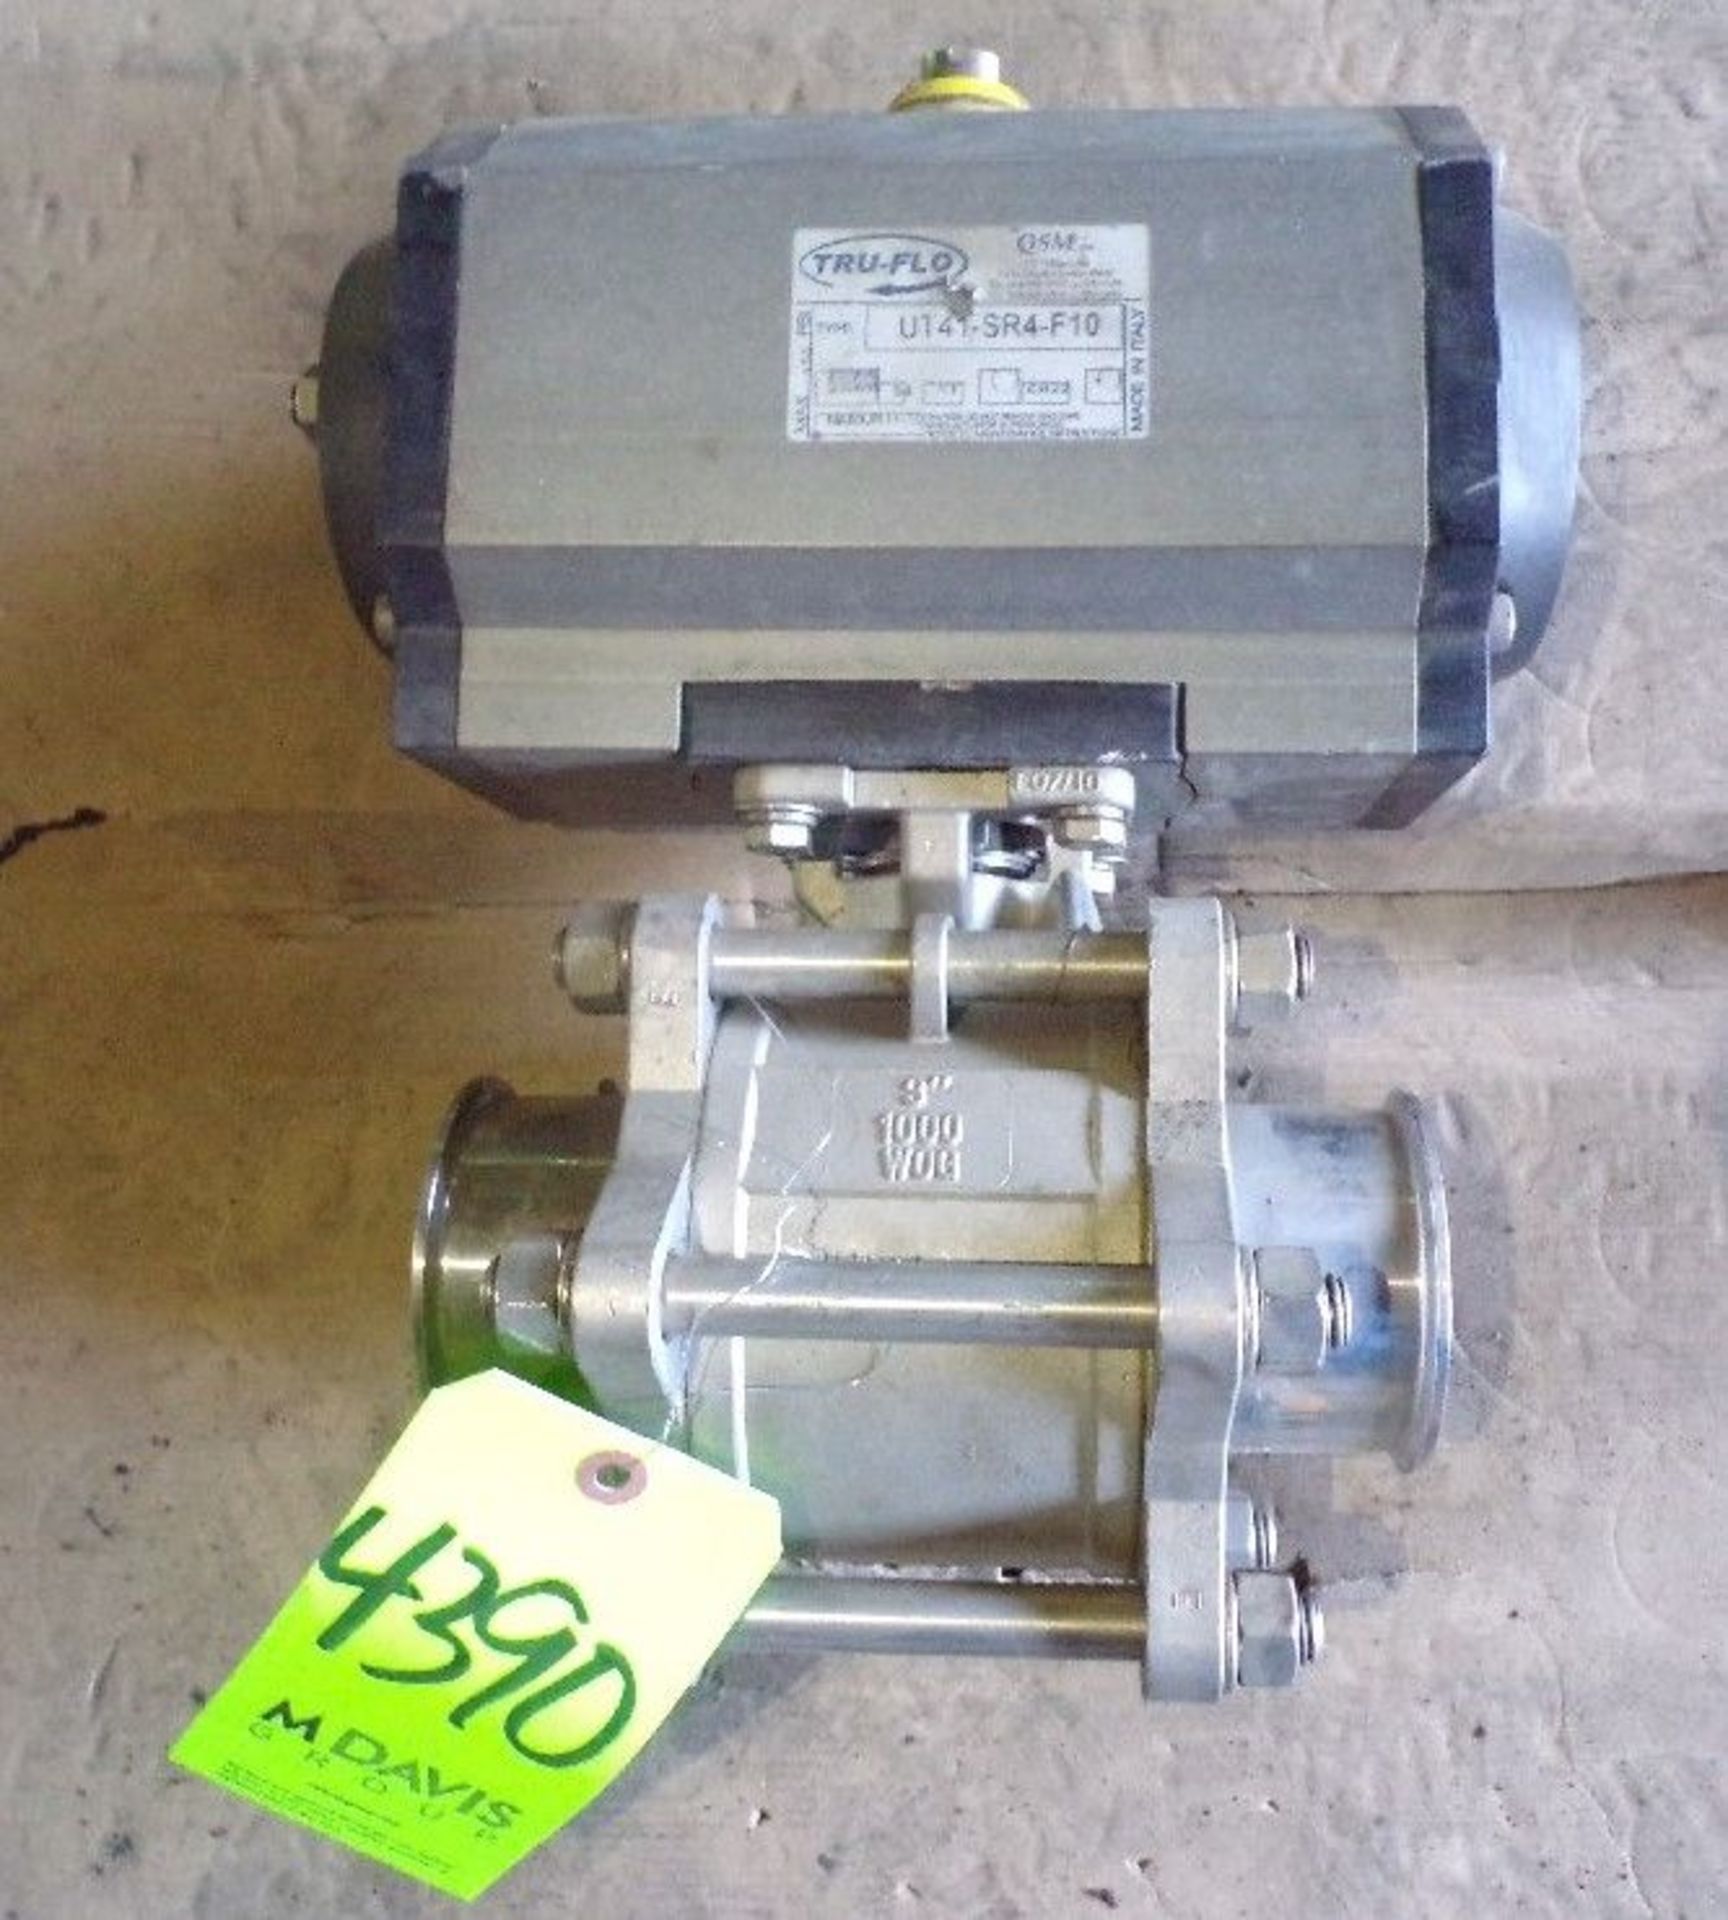 Qty (1) Tru-Flo Type UT41-SR4-F10 Heavy Duty 3 inch sanitary modulating ball valve